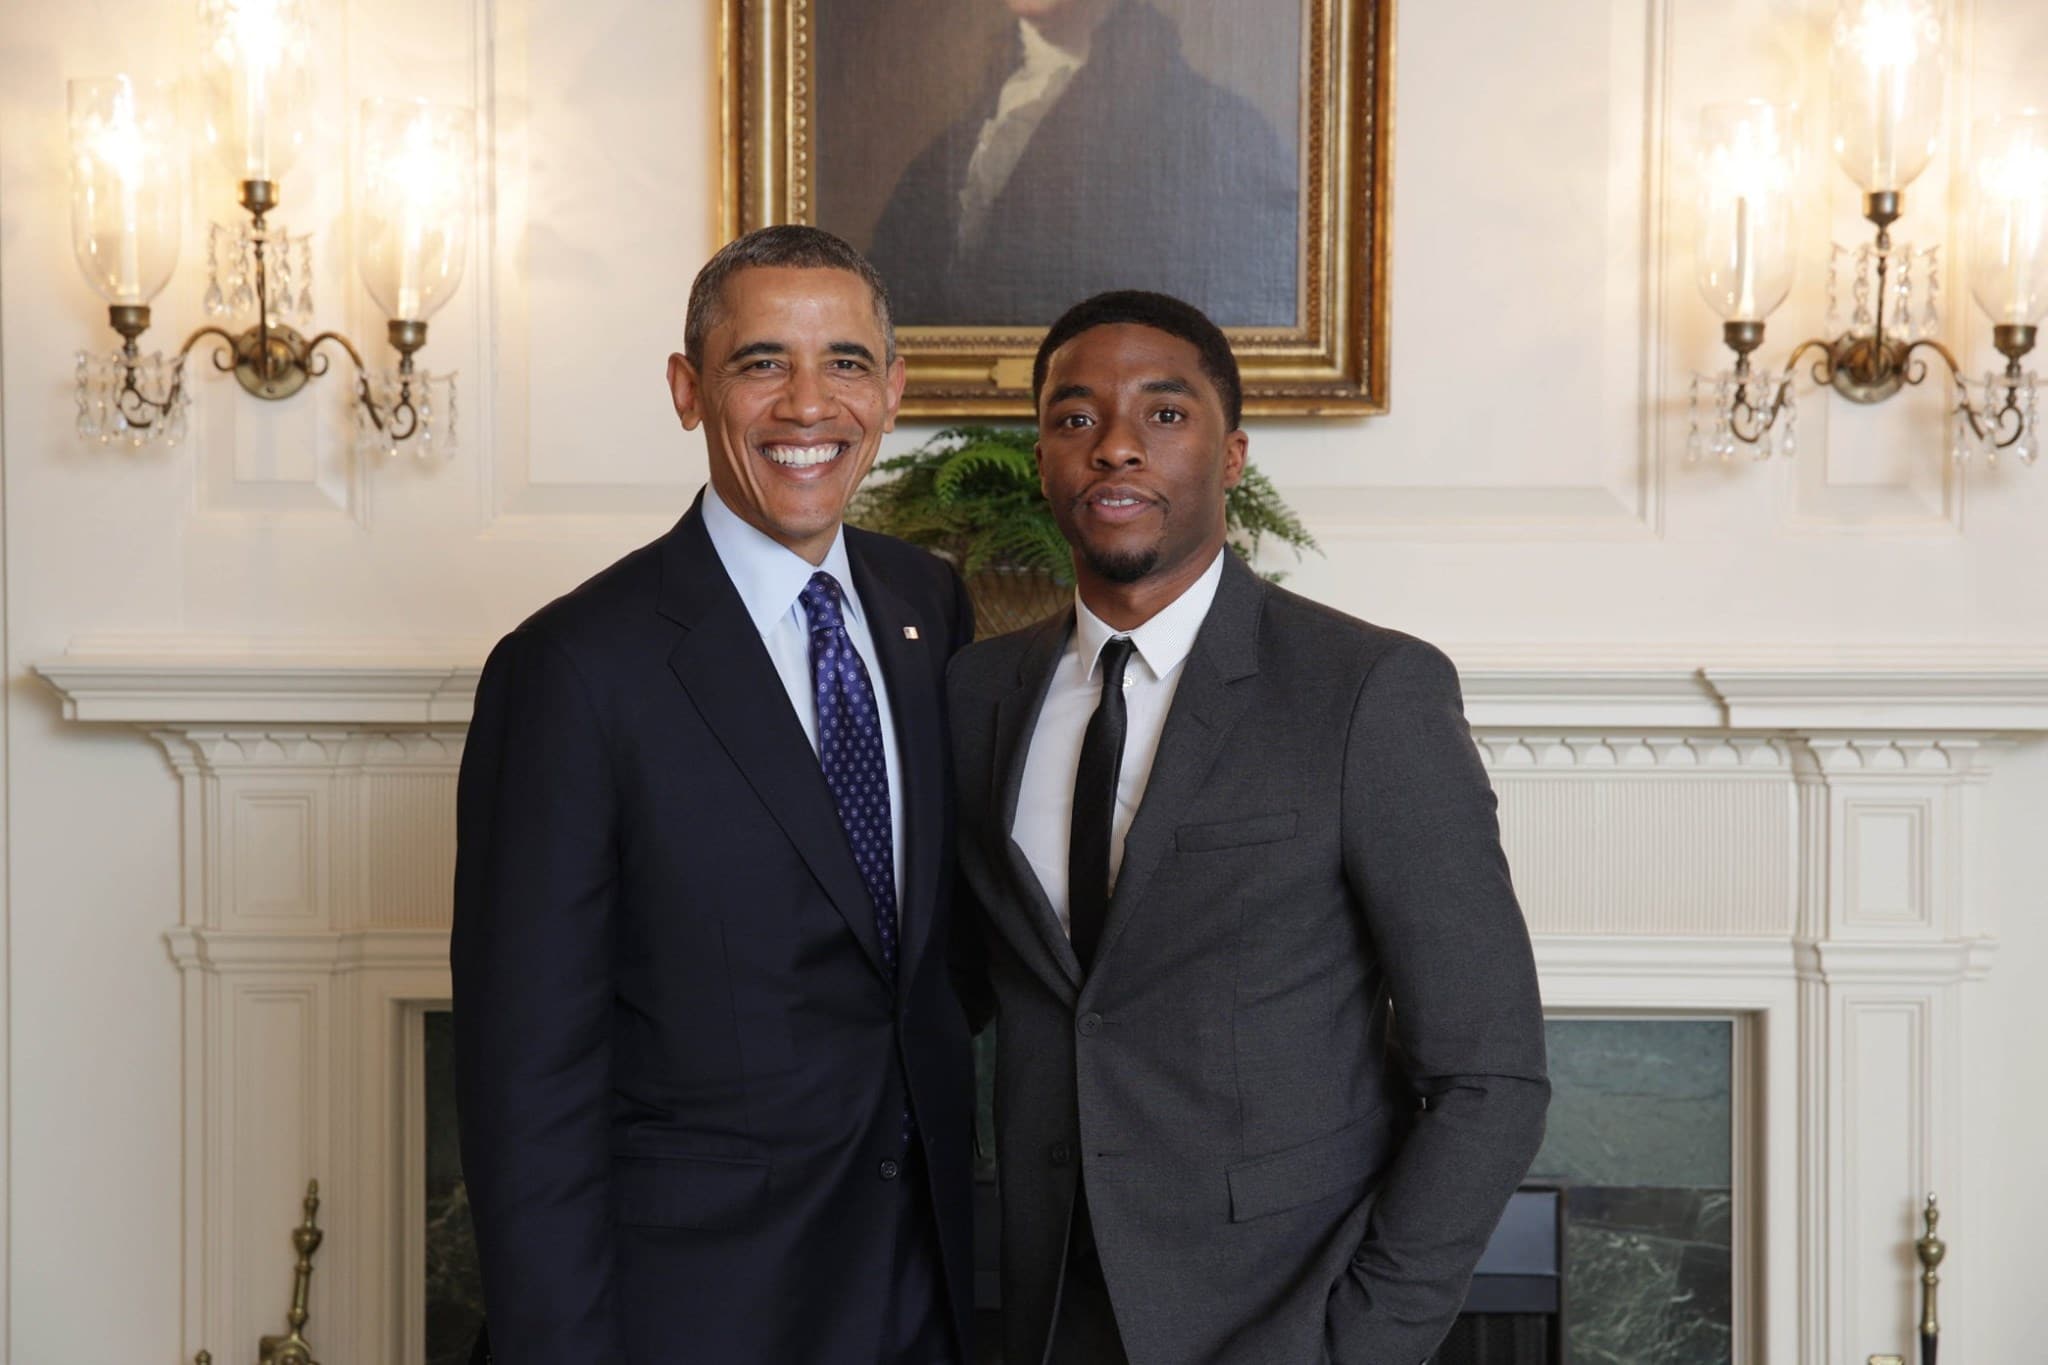 L'hommage de Barack Obama à Chadwick Boseman